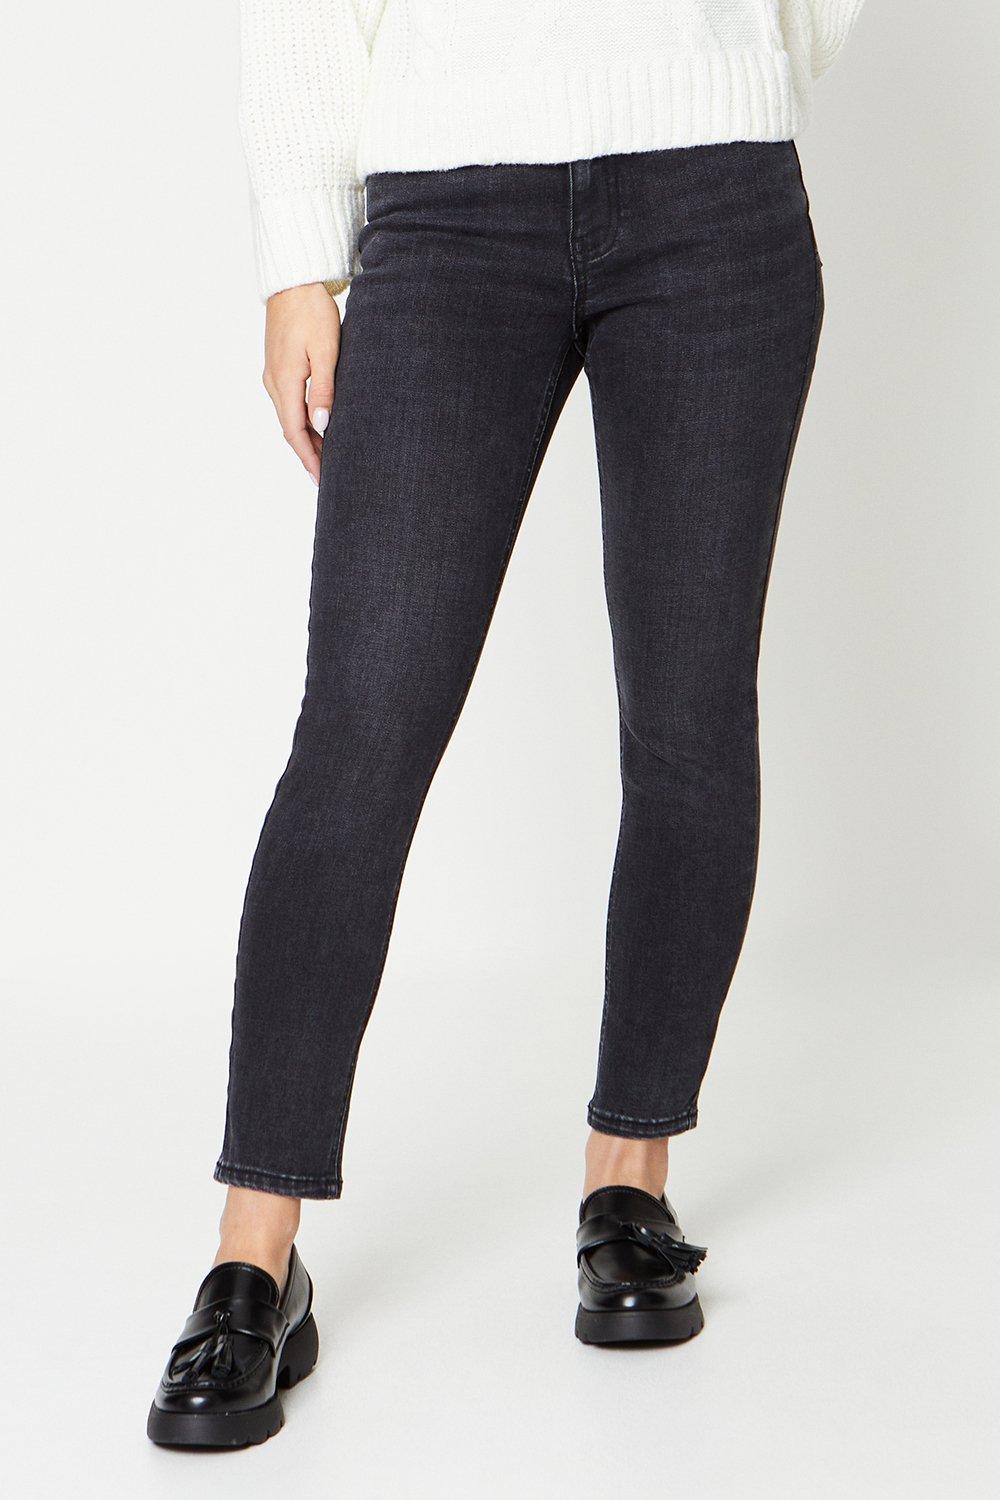 Women's Petite High Rise Skinny Jeans - black - 12